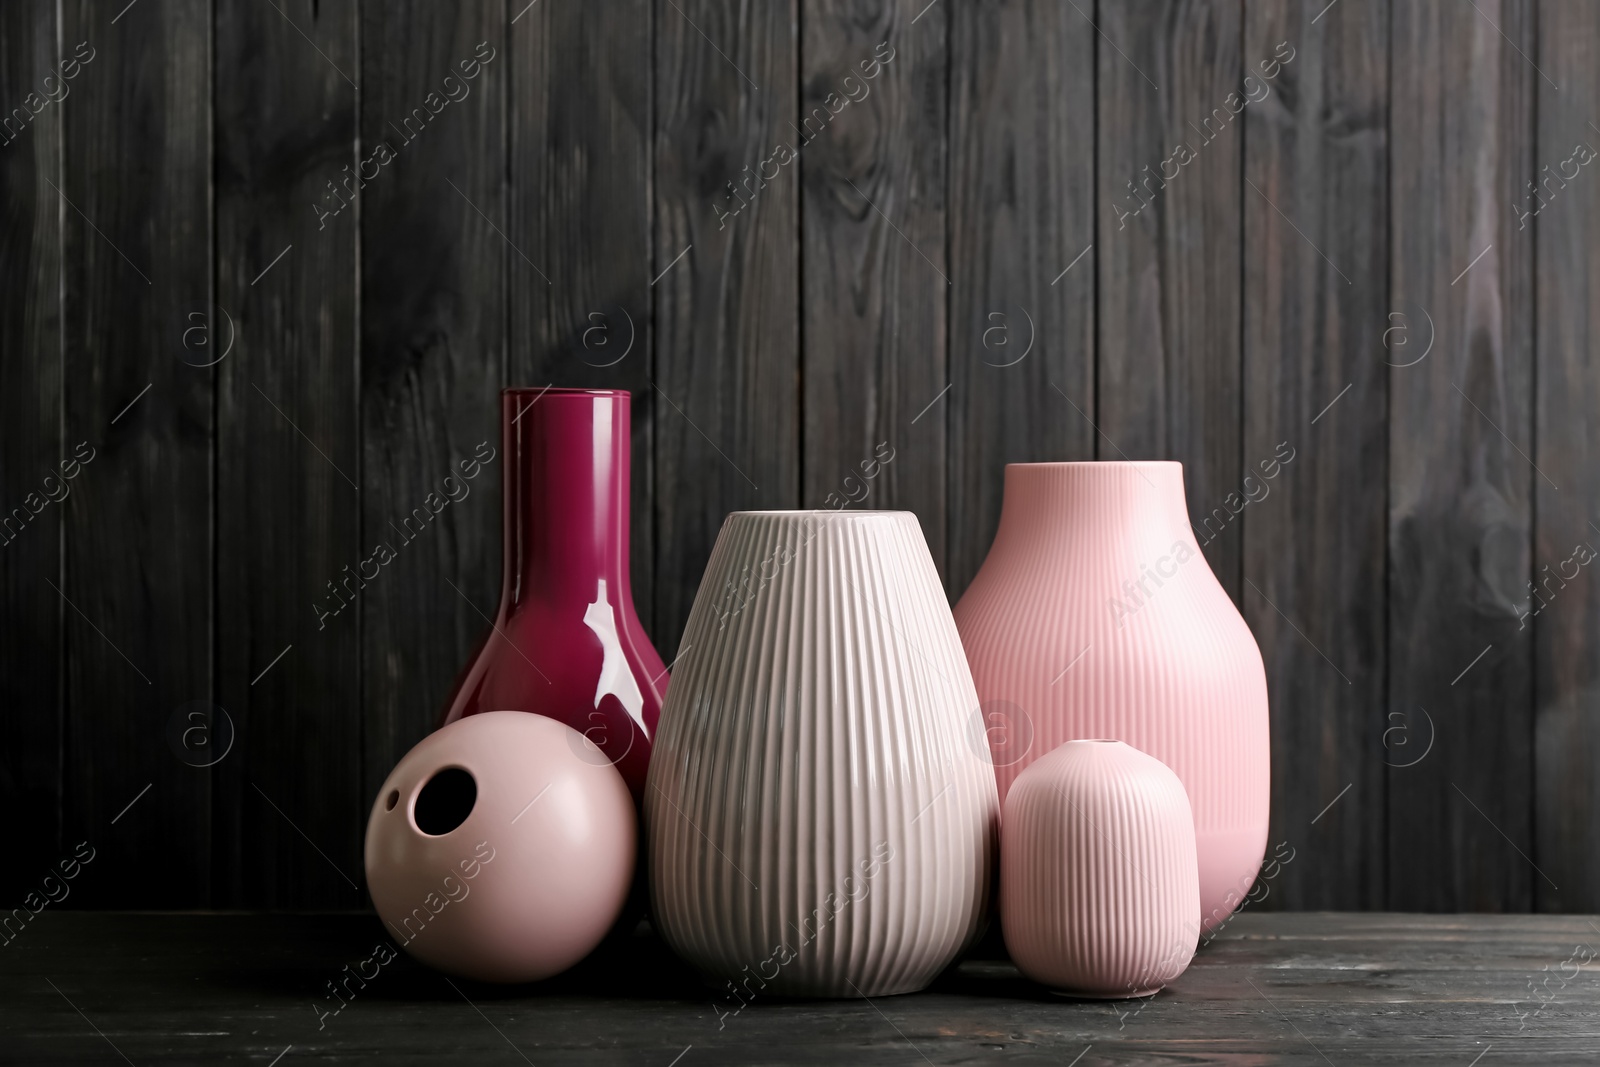 Photo of Stylish ceramic vases on black wooden table